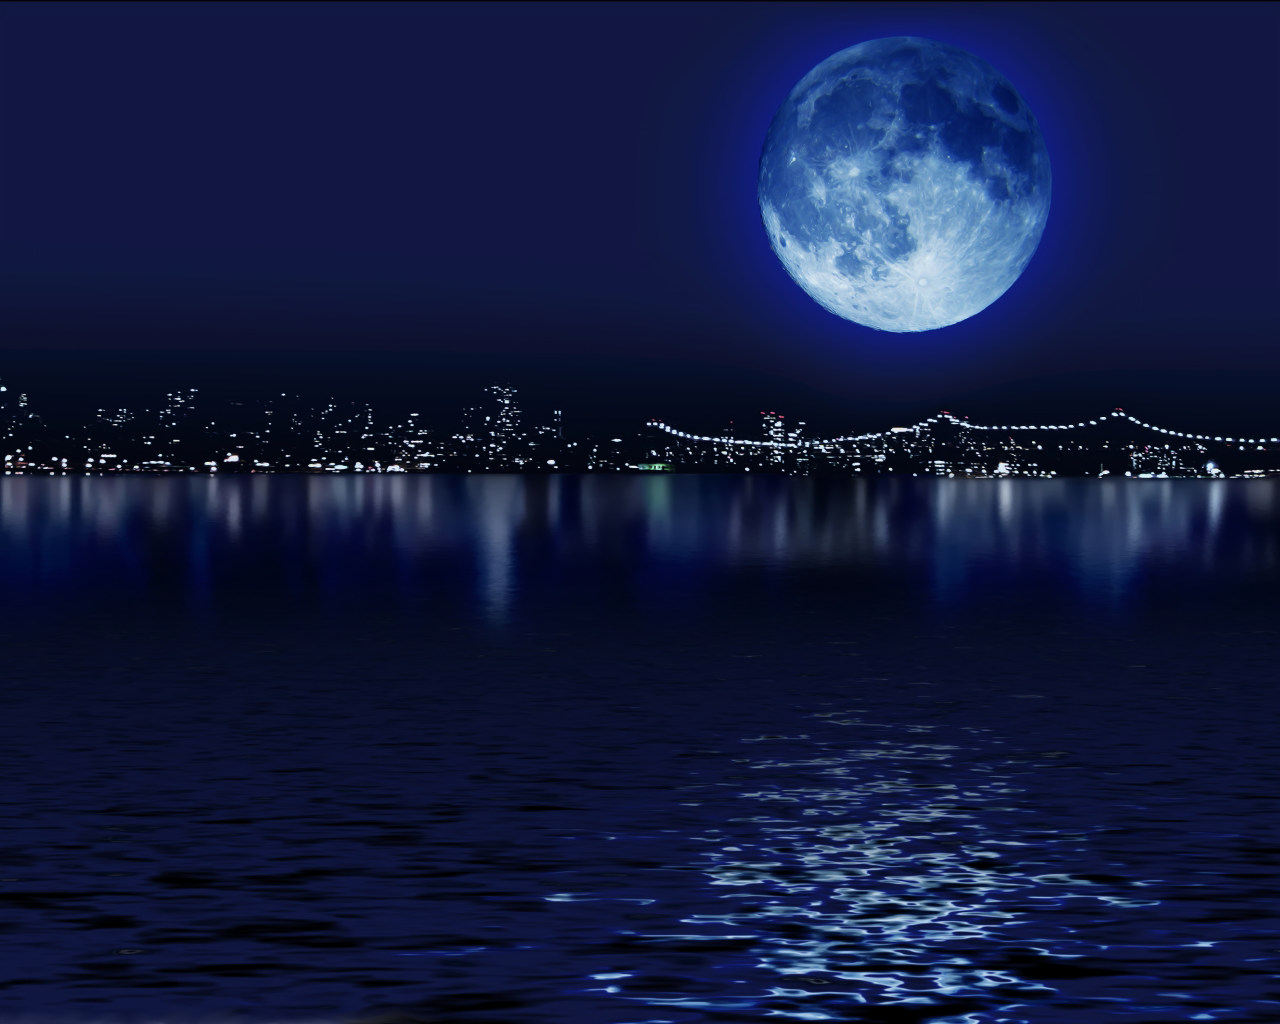 http://2.bp.blogspot.com/-oti5jhzTw5c/TaAQaNfgvyI/AAAAAAAAAHs/jVccy44emS4/s1600/blue+moon.jpg